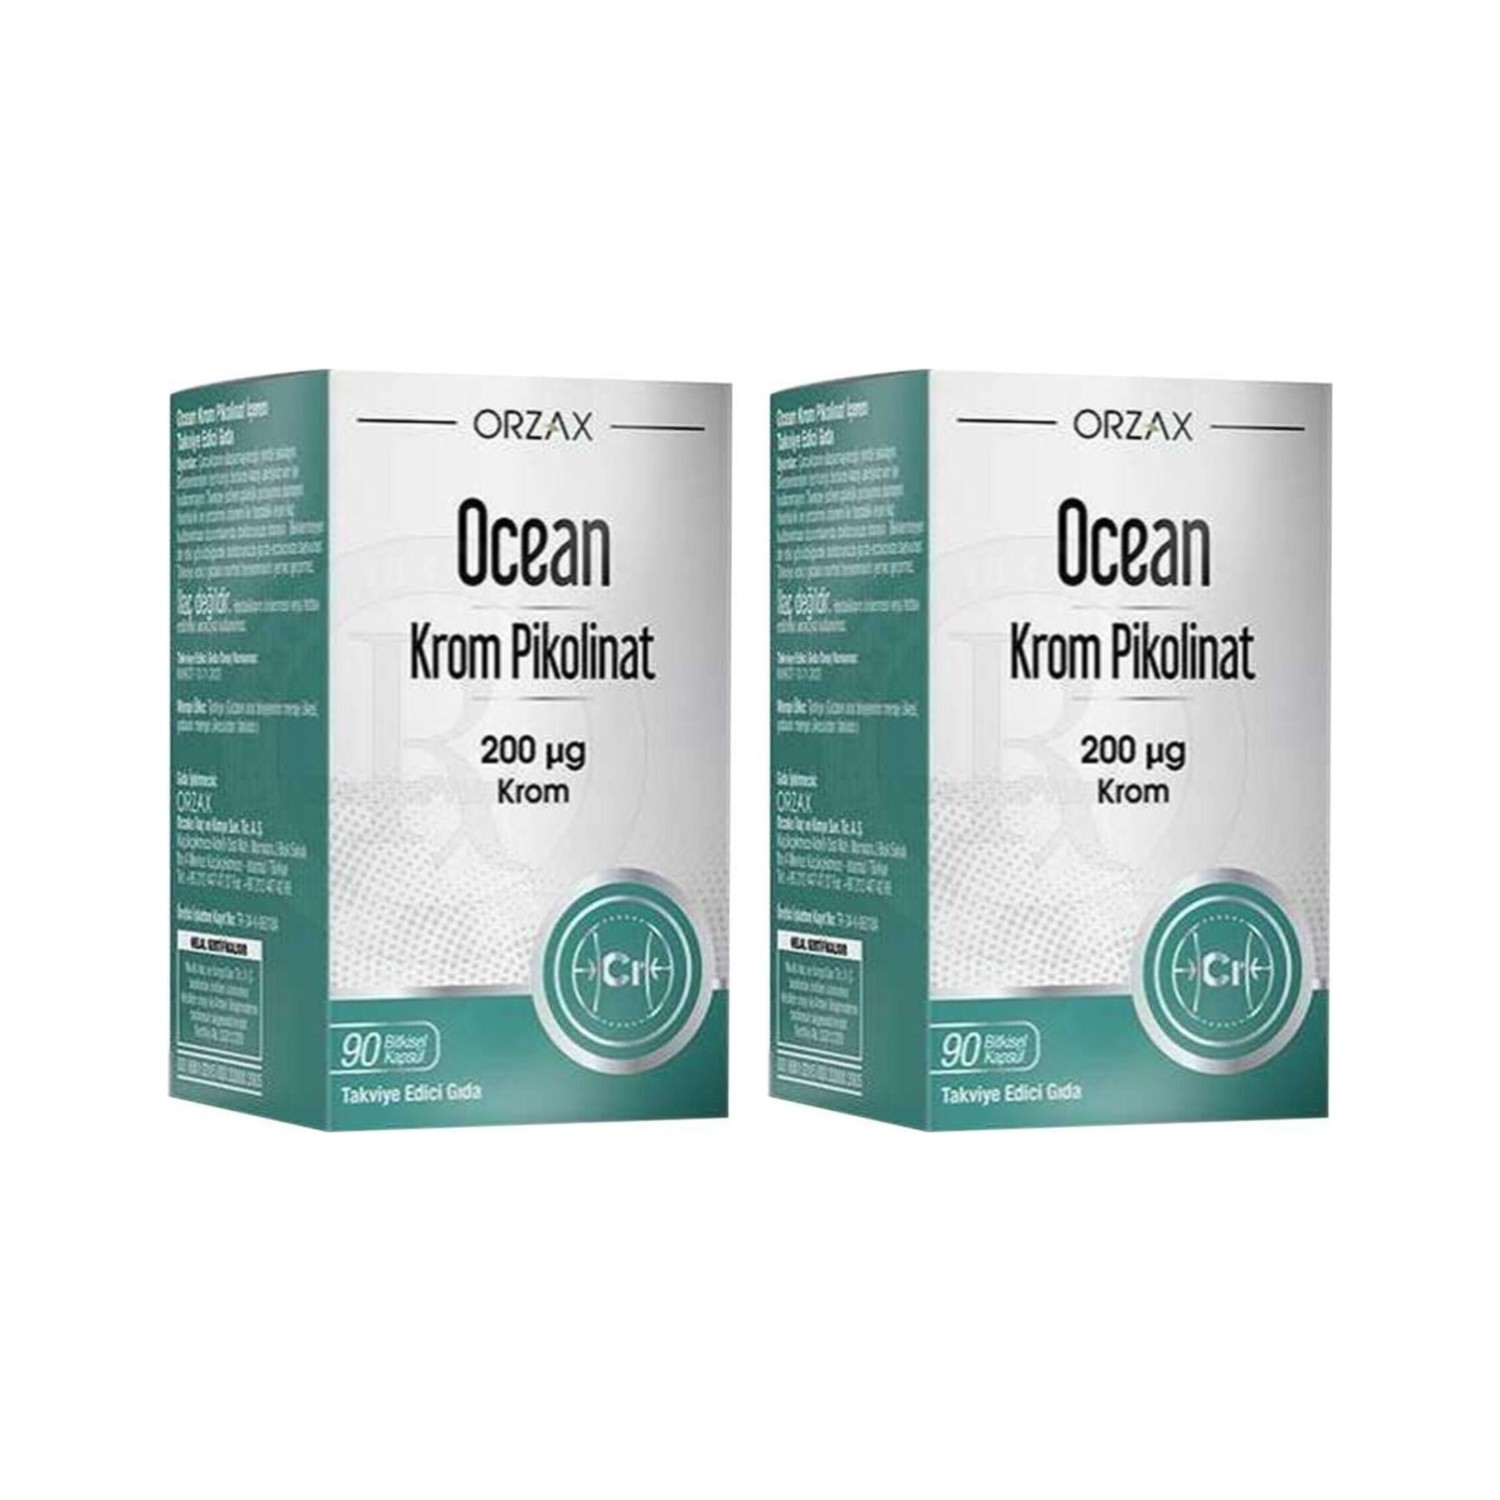 Пиколинат хрома Ocean 200 мкг, 2 упаковки по 90 капсул